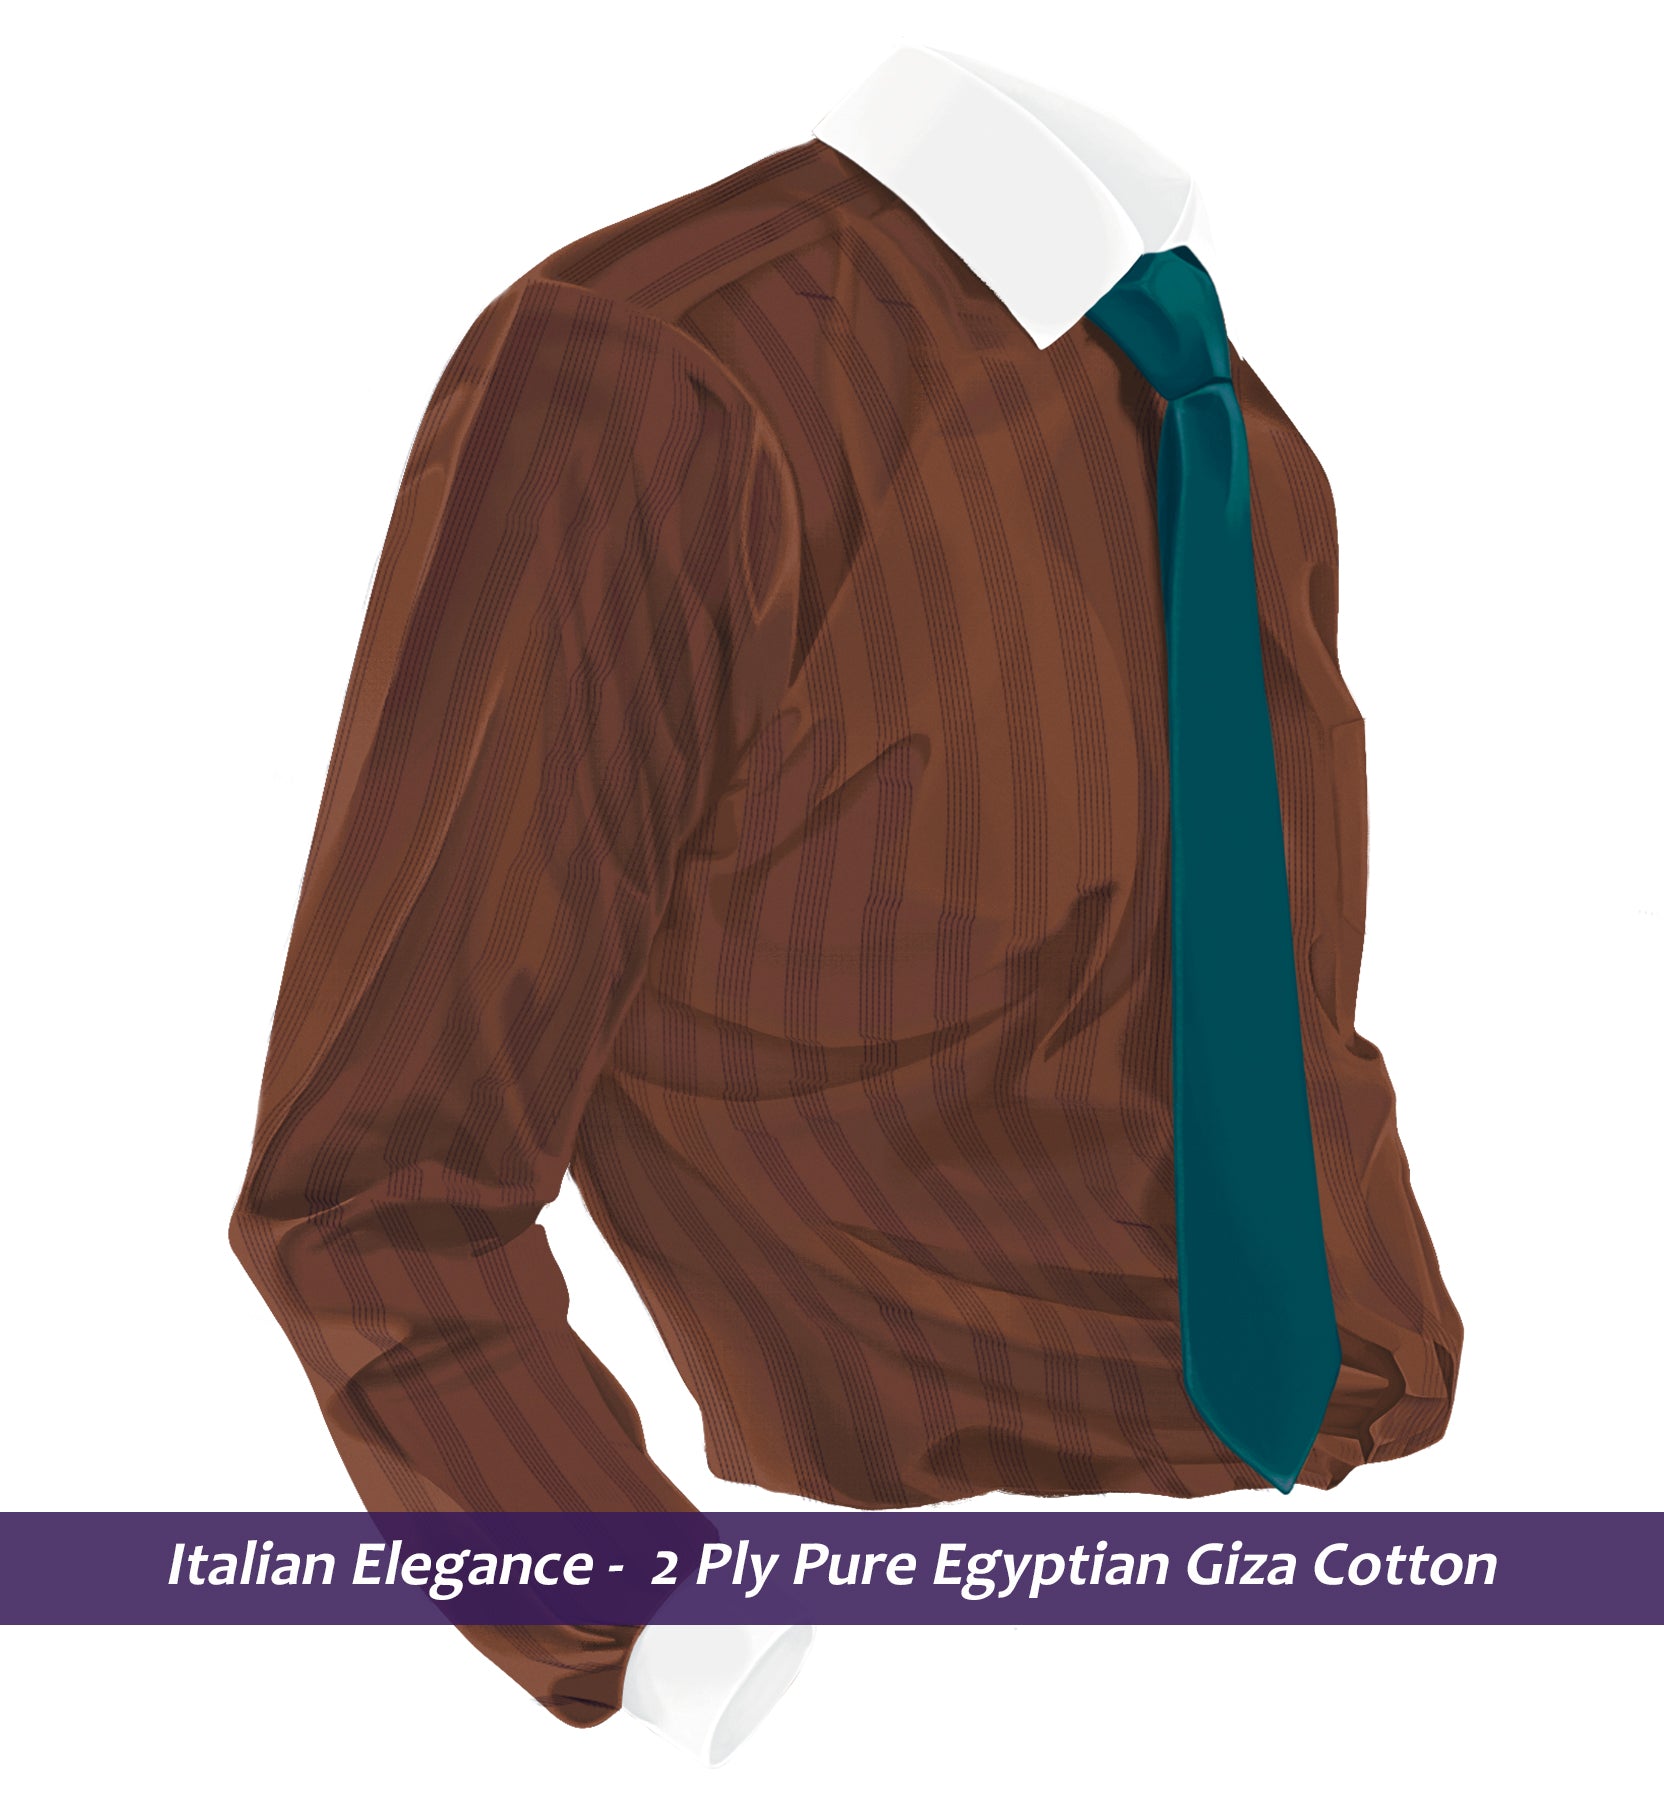 Senegal- Cinnamon Brown Stripe with White Collar